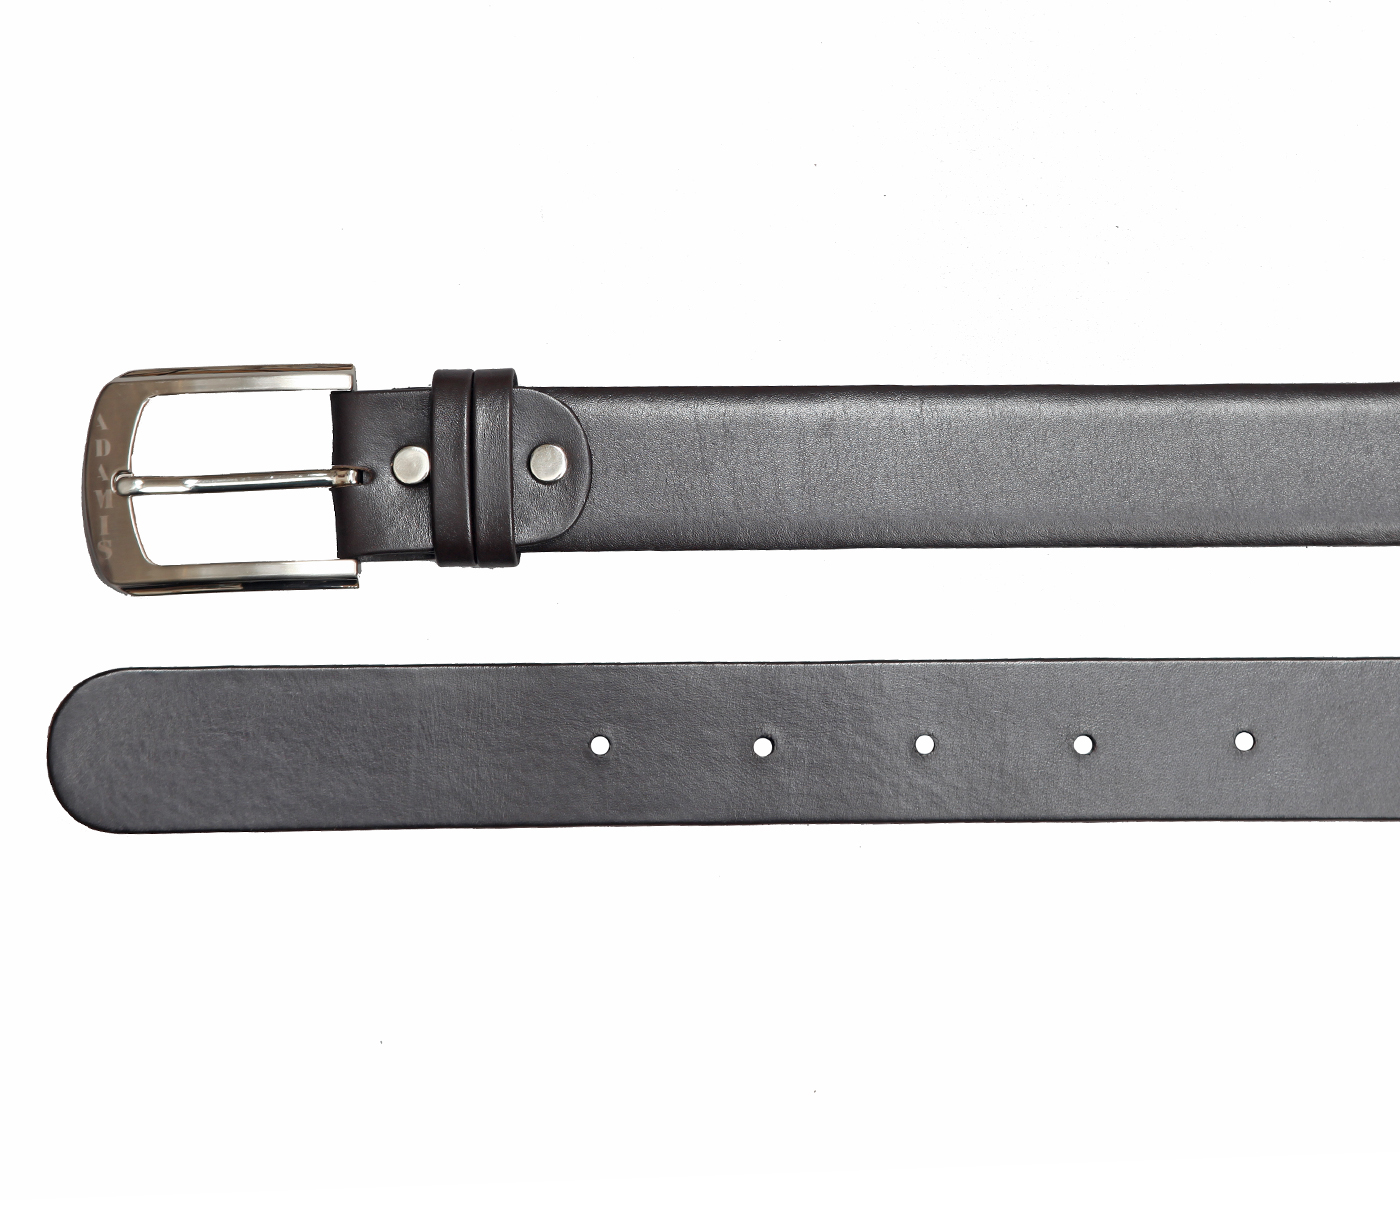 BL142--Men's Formal wear belt in Genuine Leather - Brown.